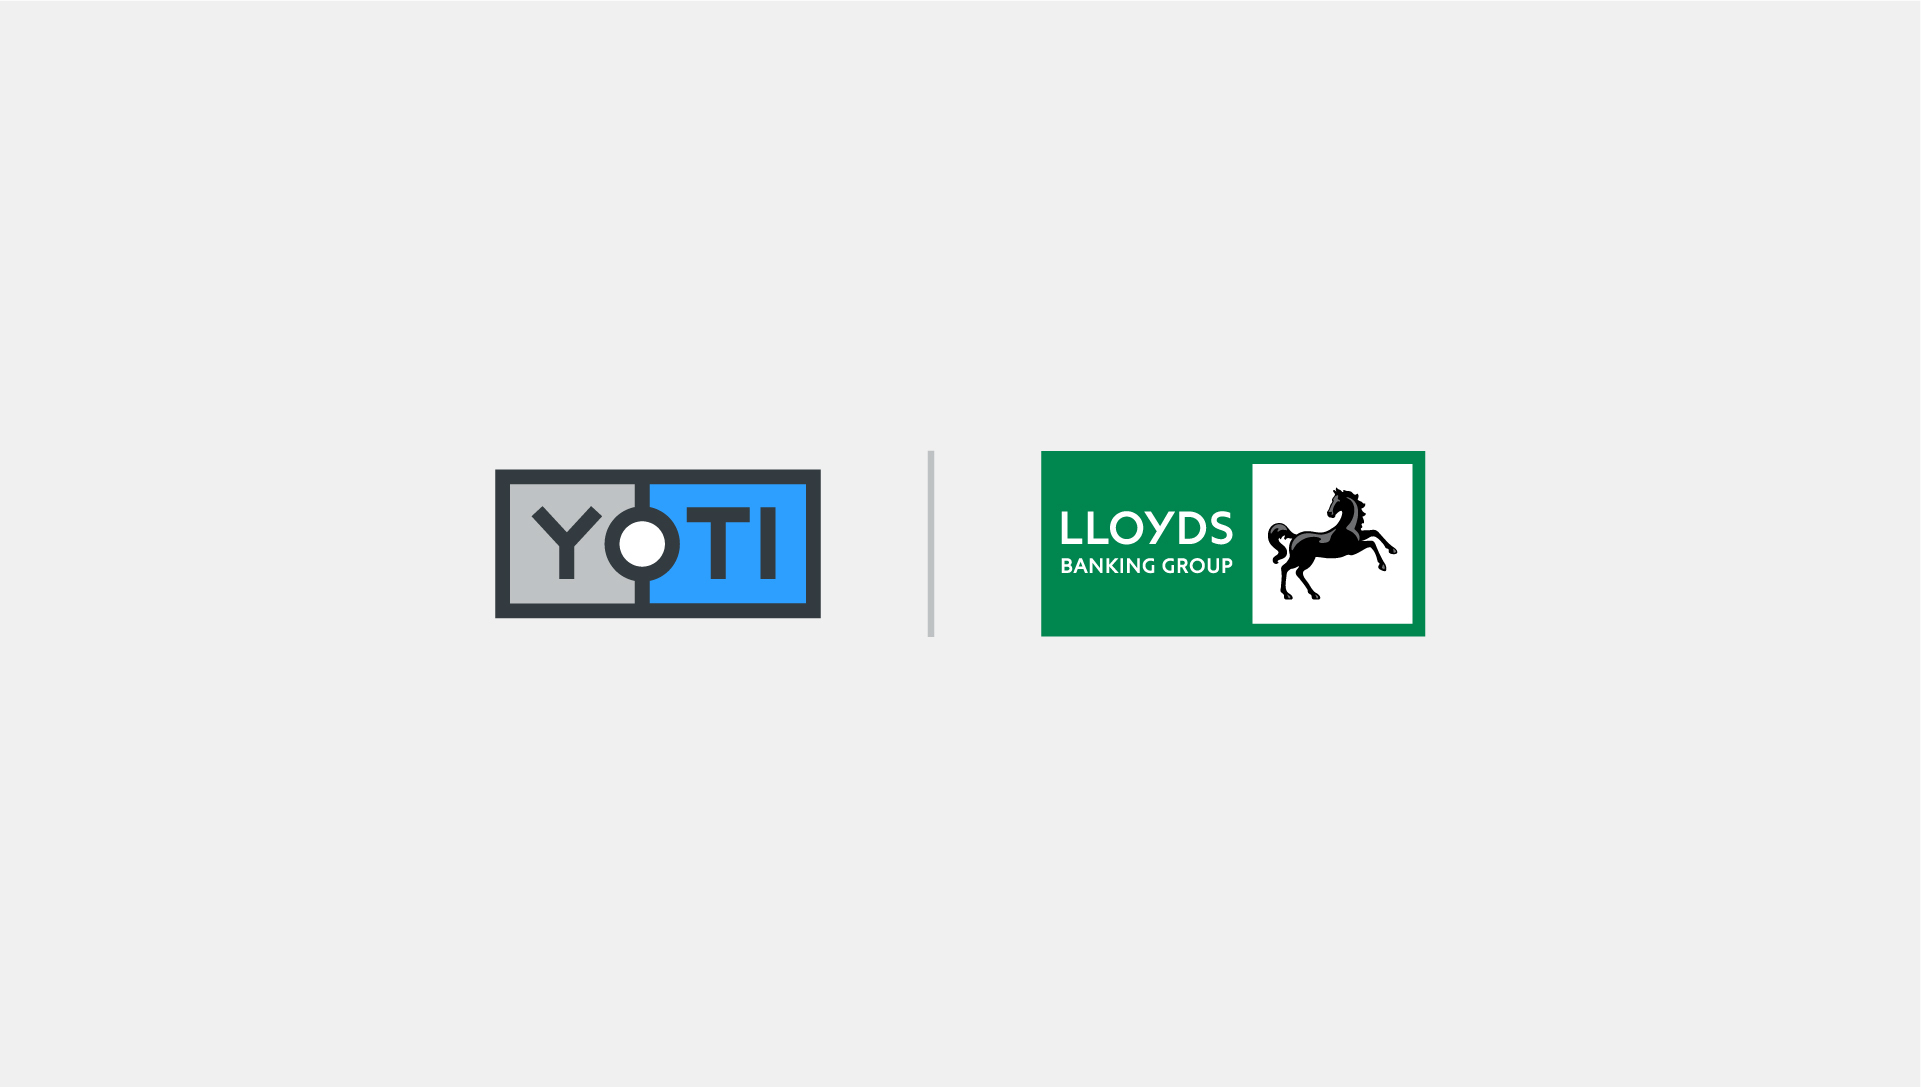 Yoti and Lloyds banking group logo lockup